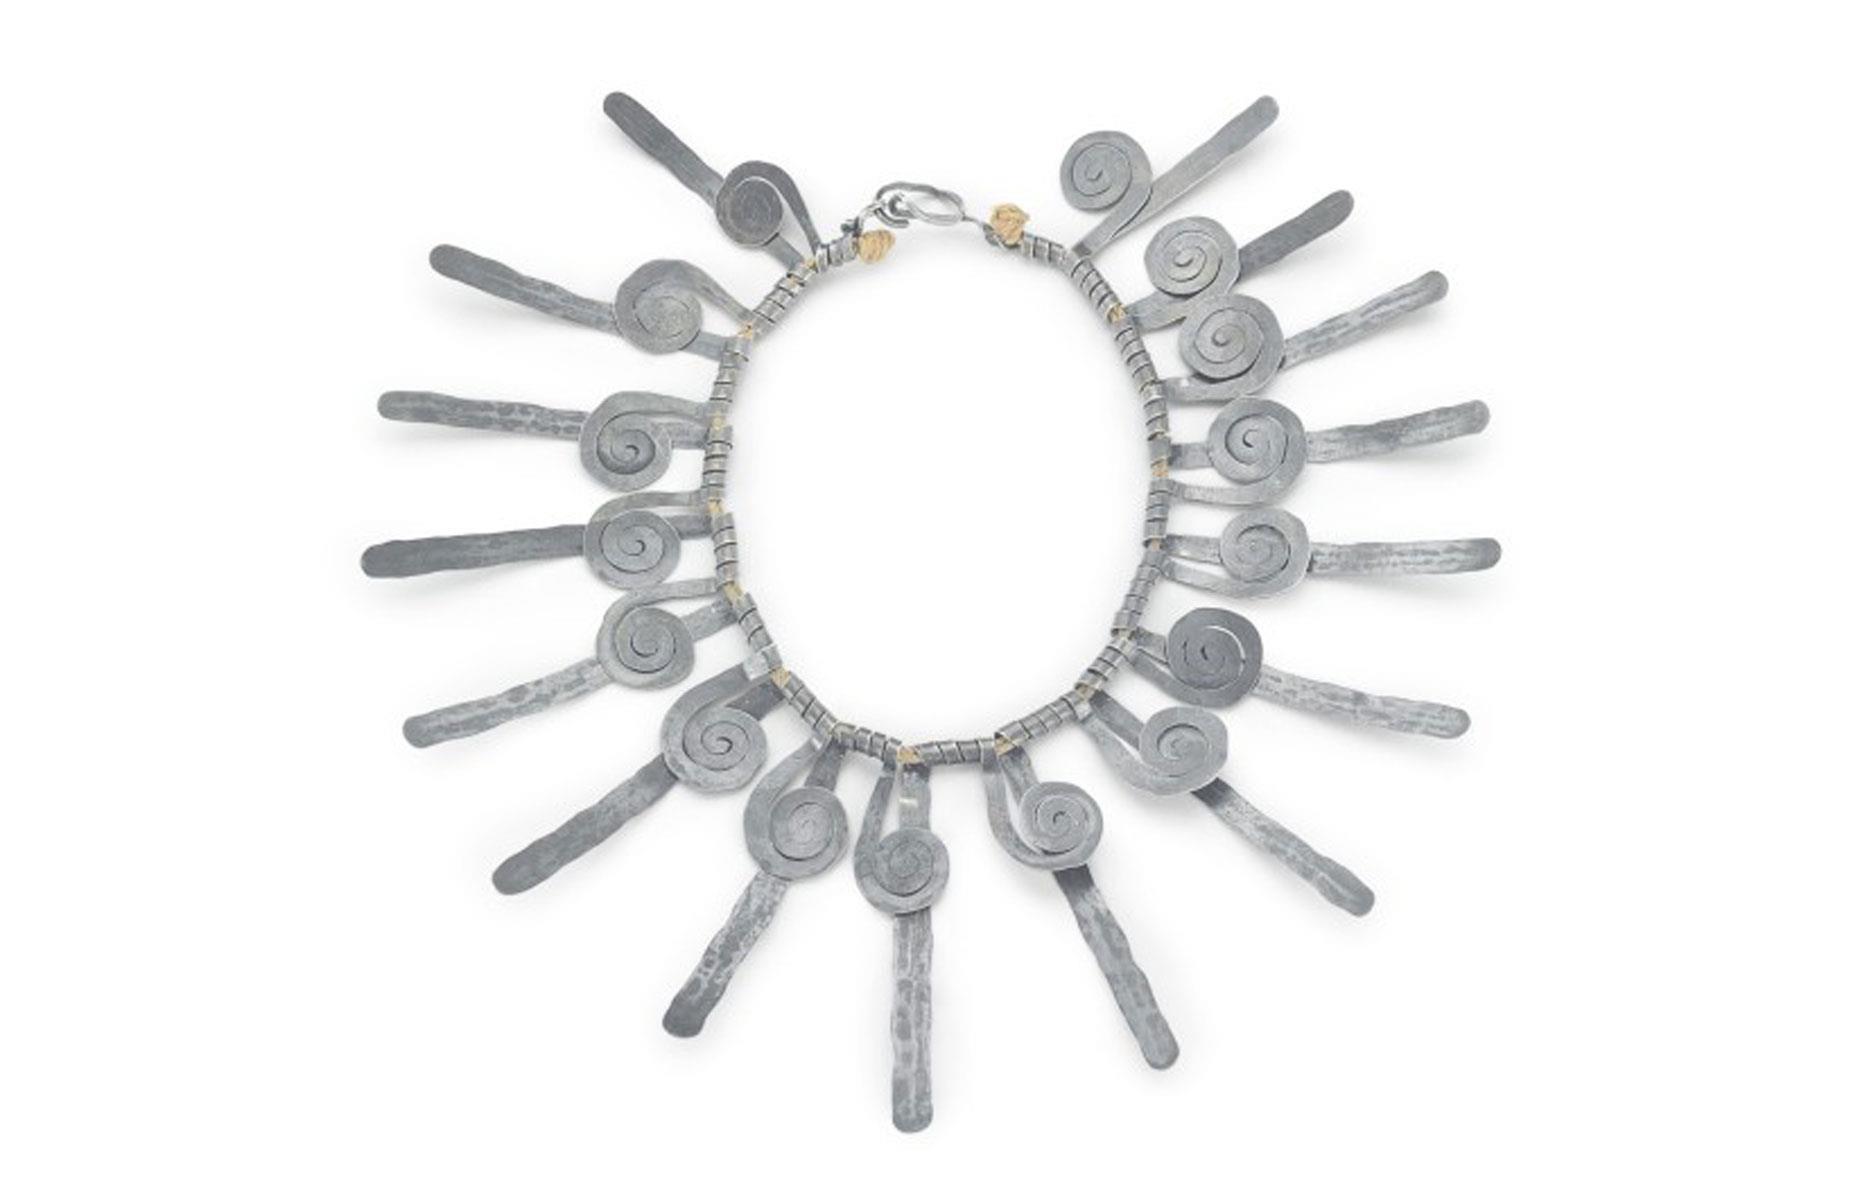 The Alexander Calder necklace